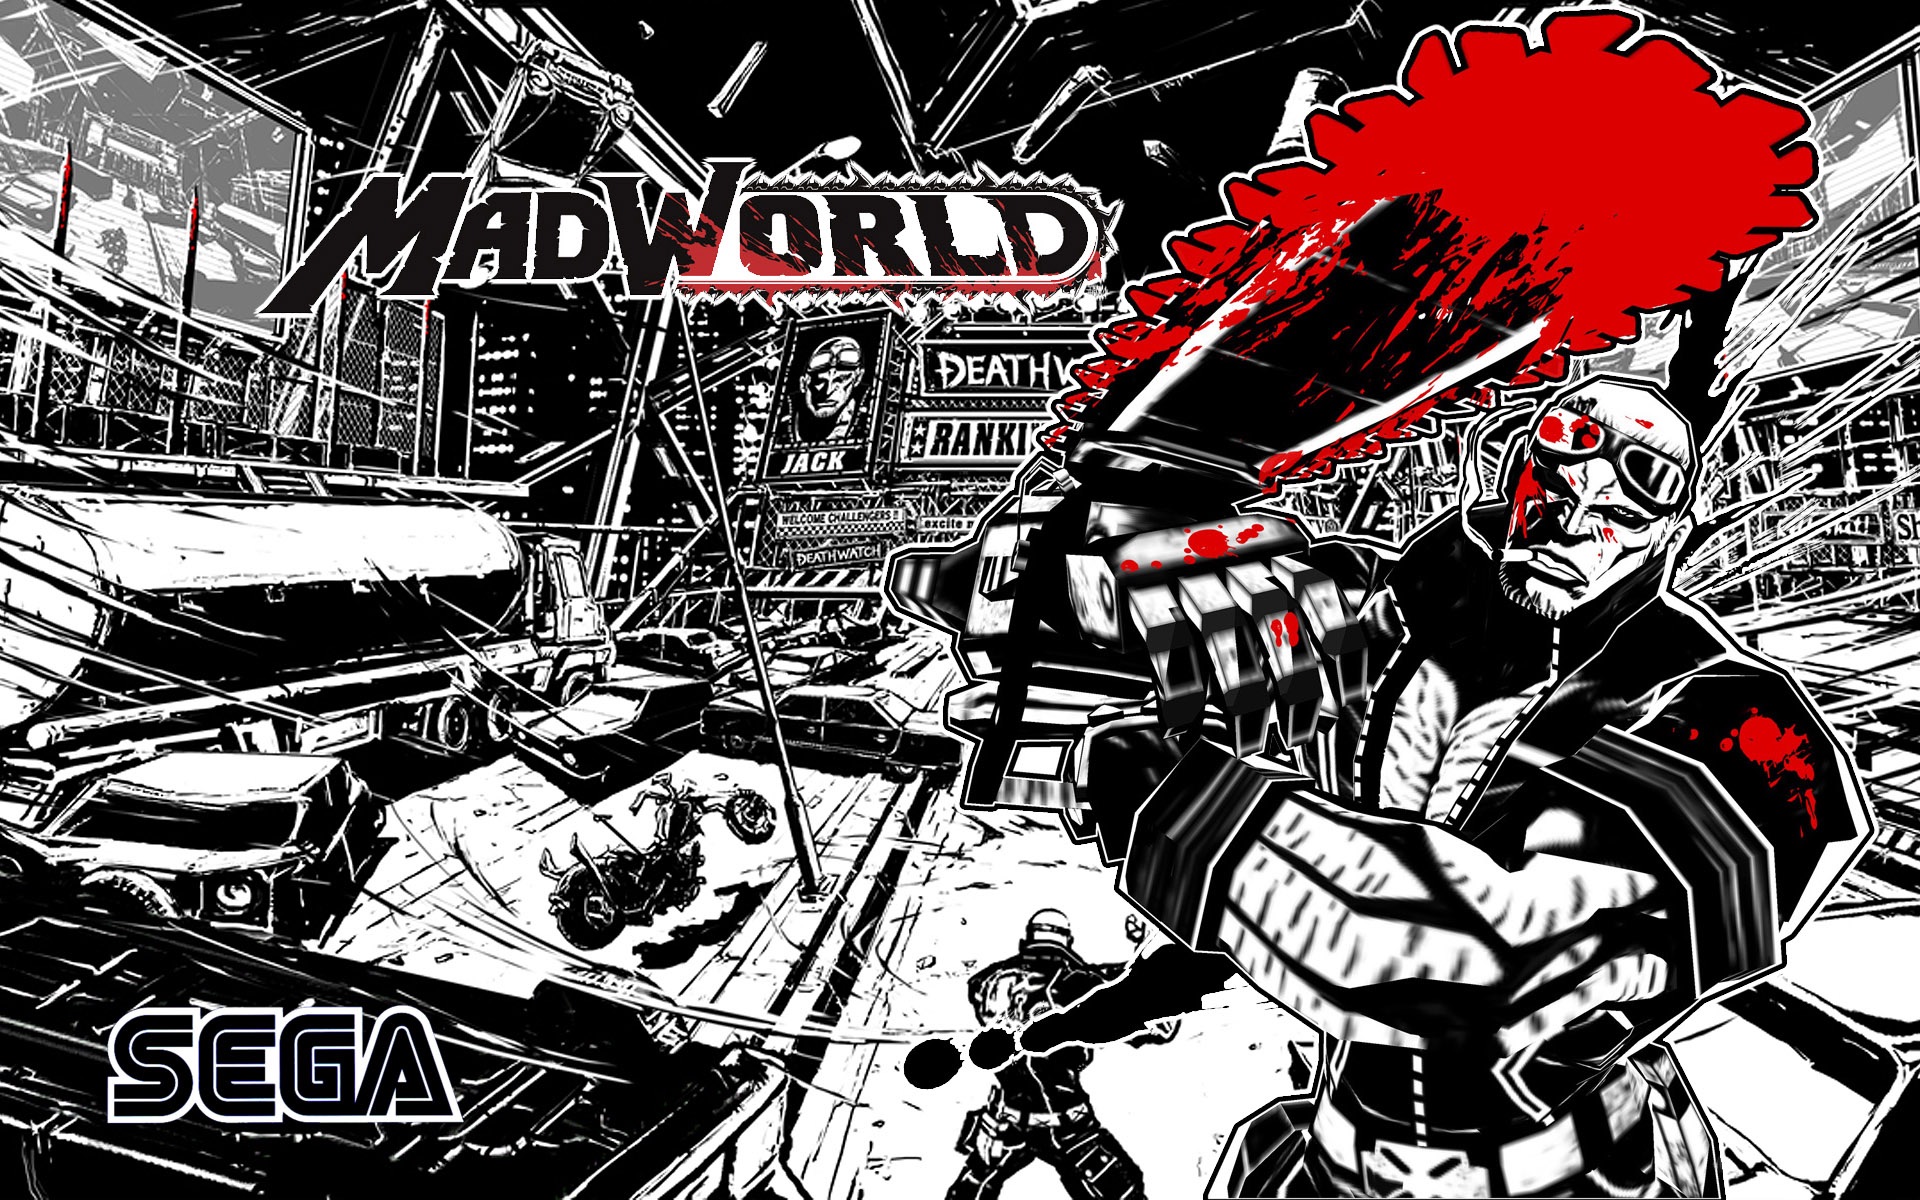 Mad Mad World - Wikipedia